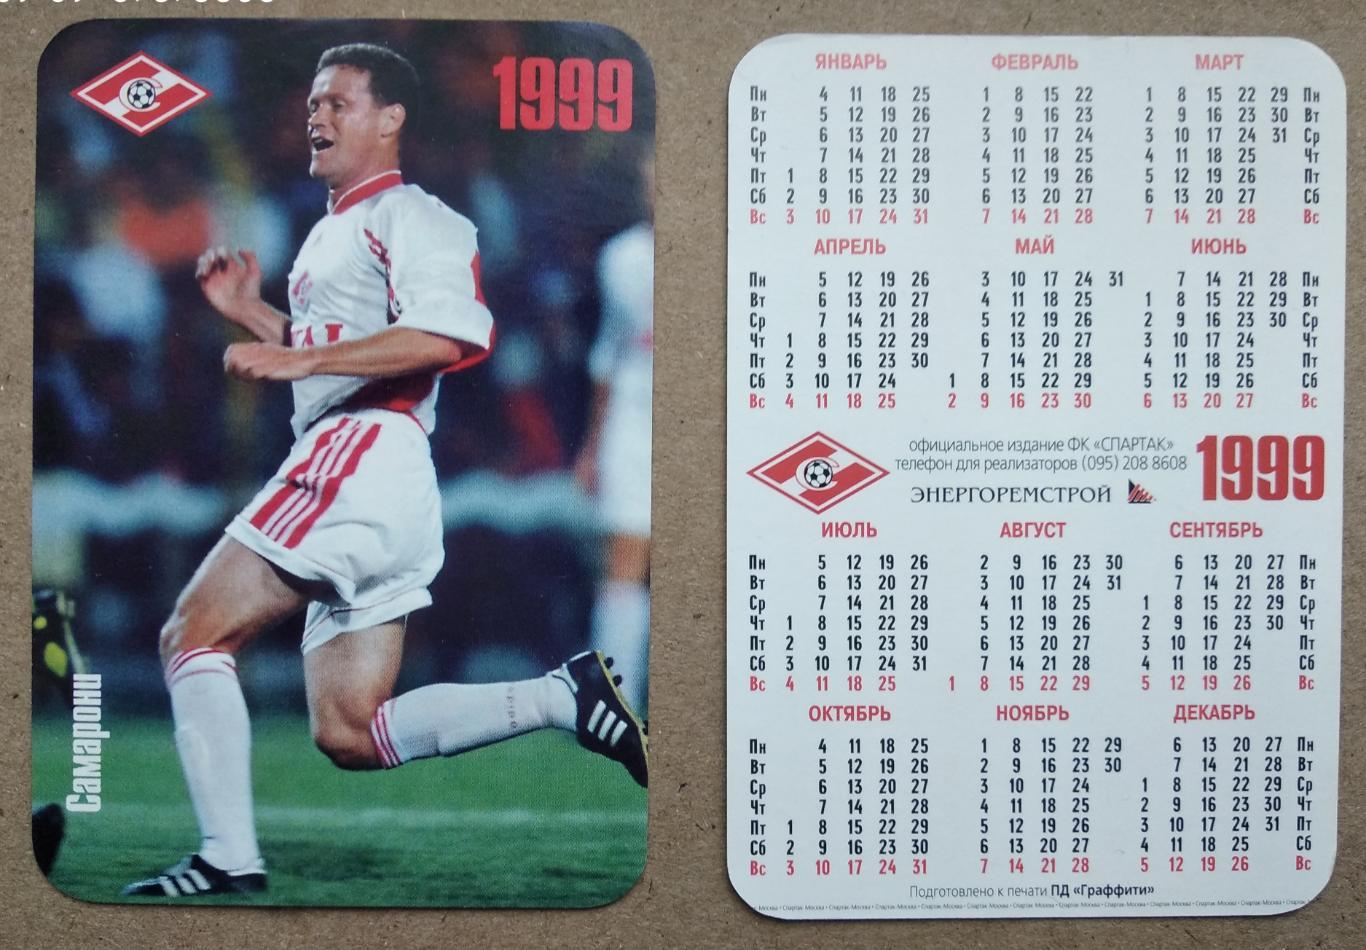 Спартак Москва - Самарони , календарик на 1999 год, официальное издание